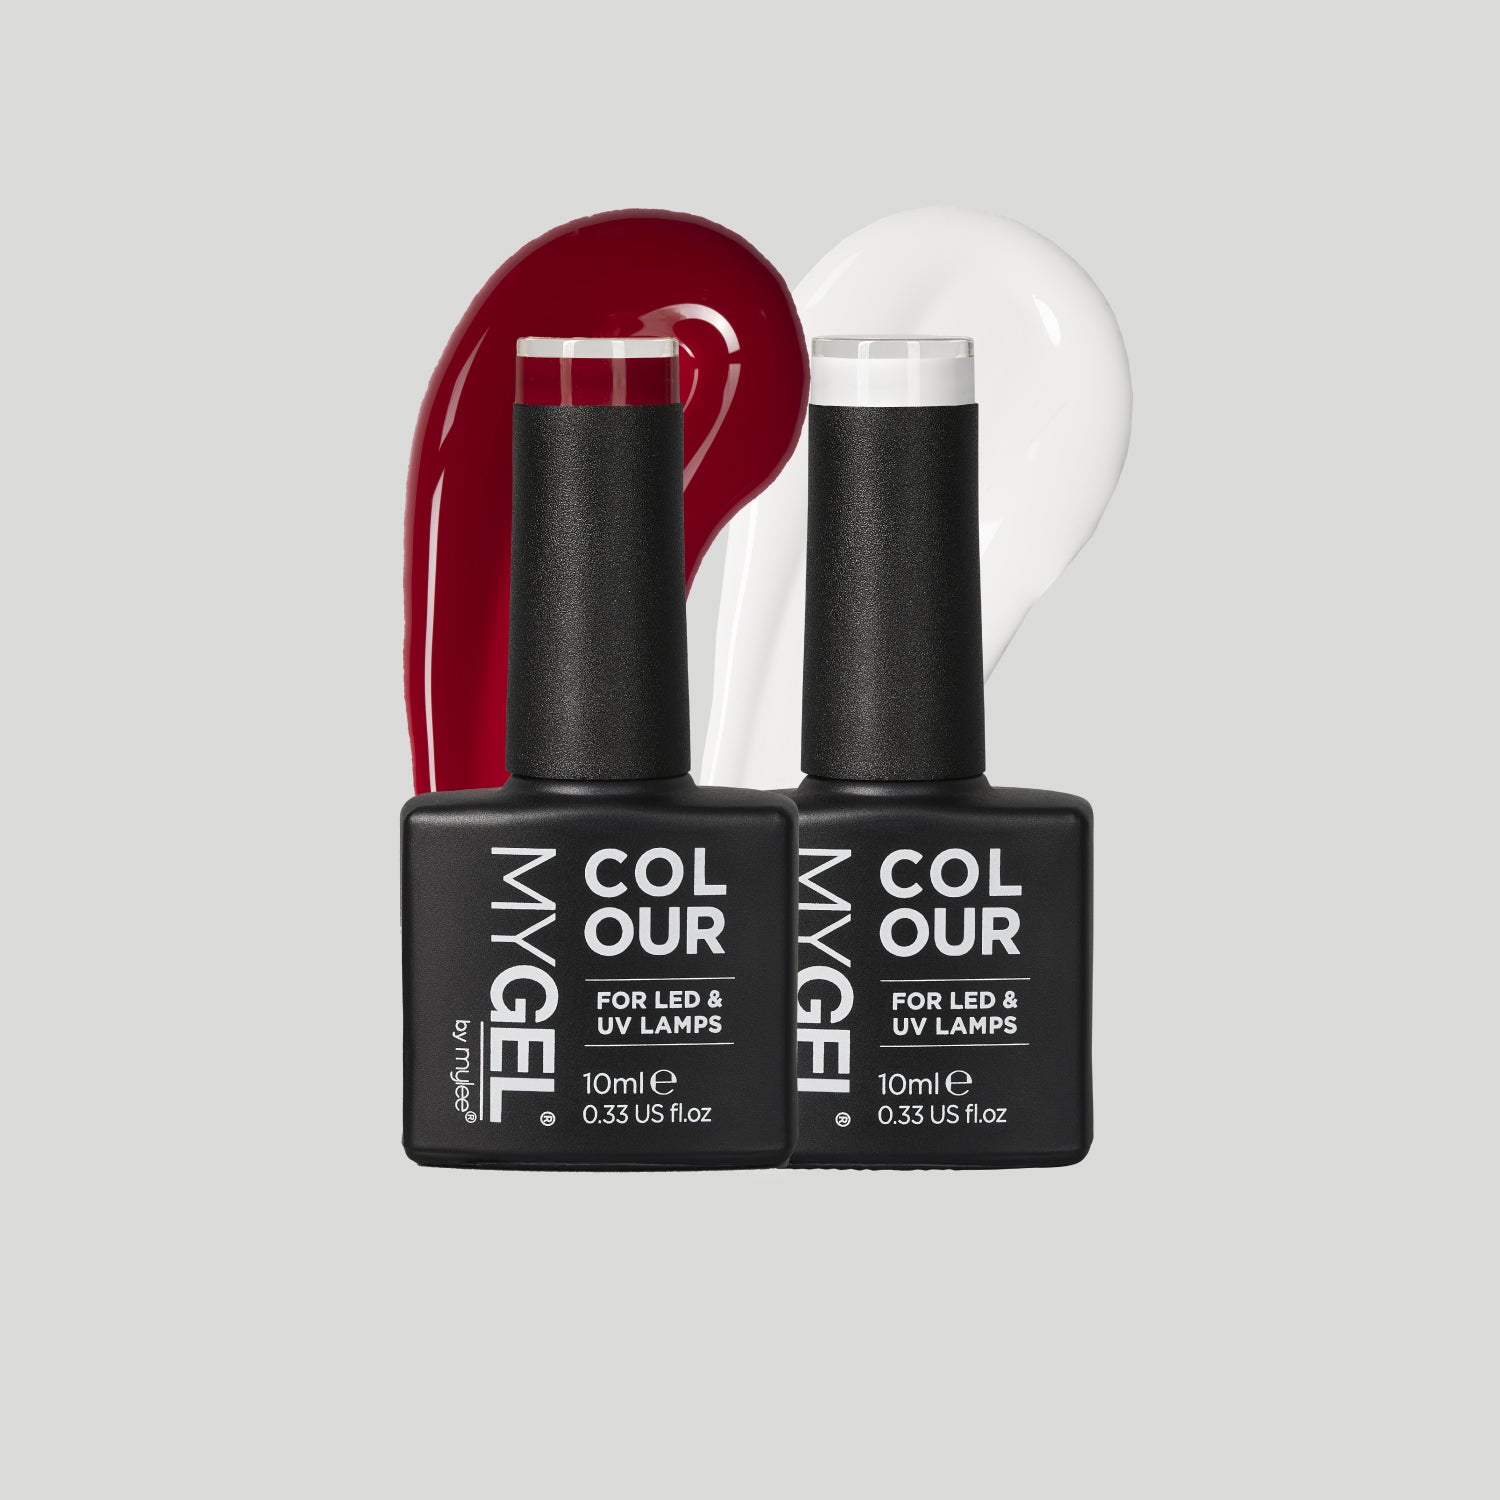 Mylee Sweetheart LED/UV Gel Nail Polish Duo - 2x10ml – Long Lasting At Home Manicure/Pedicure, High Gloss And Chip Free Wear Nail Varnish